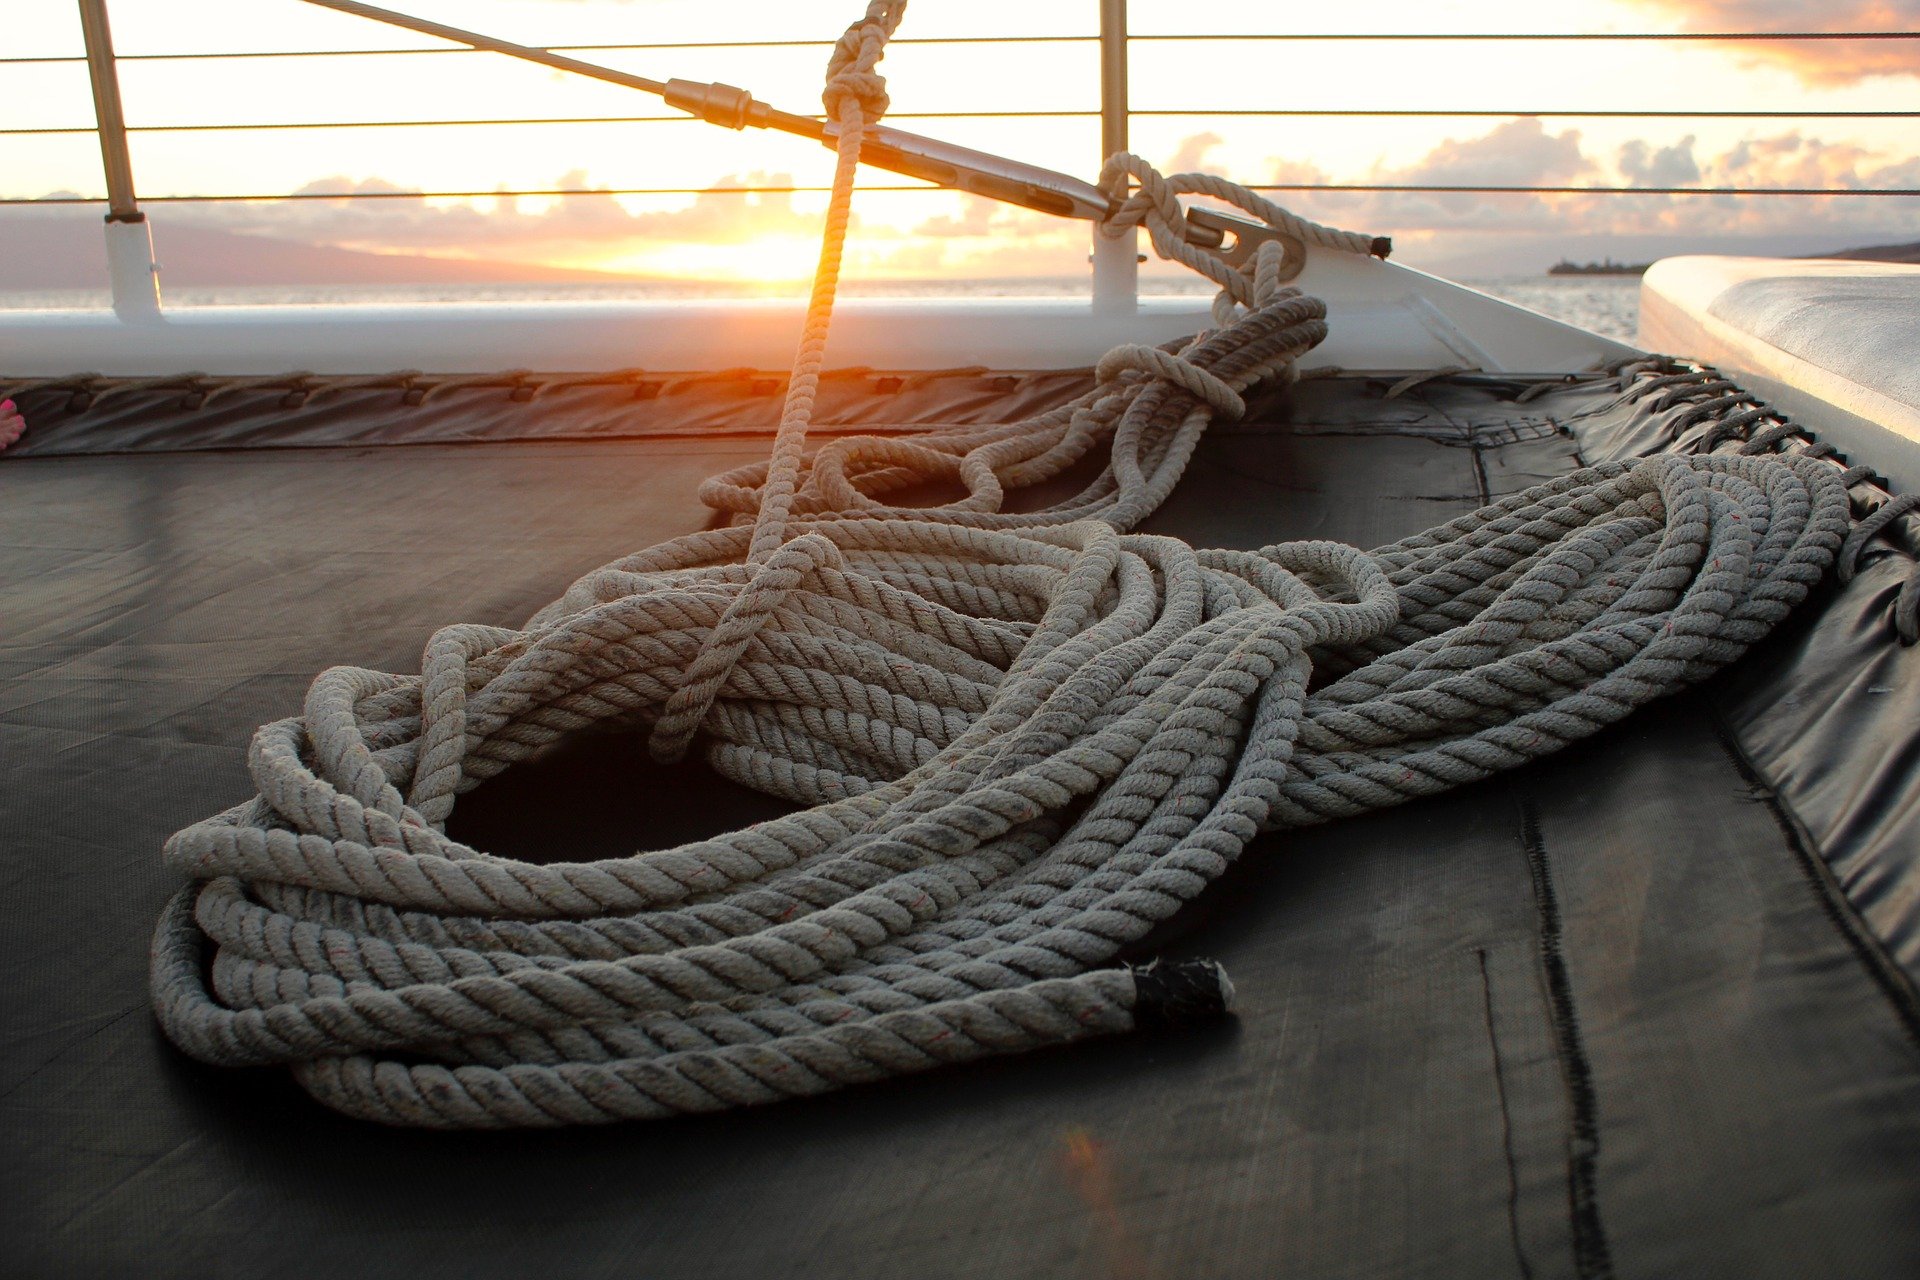 Rope on a Boat - VeteranCarDonations.org